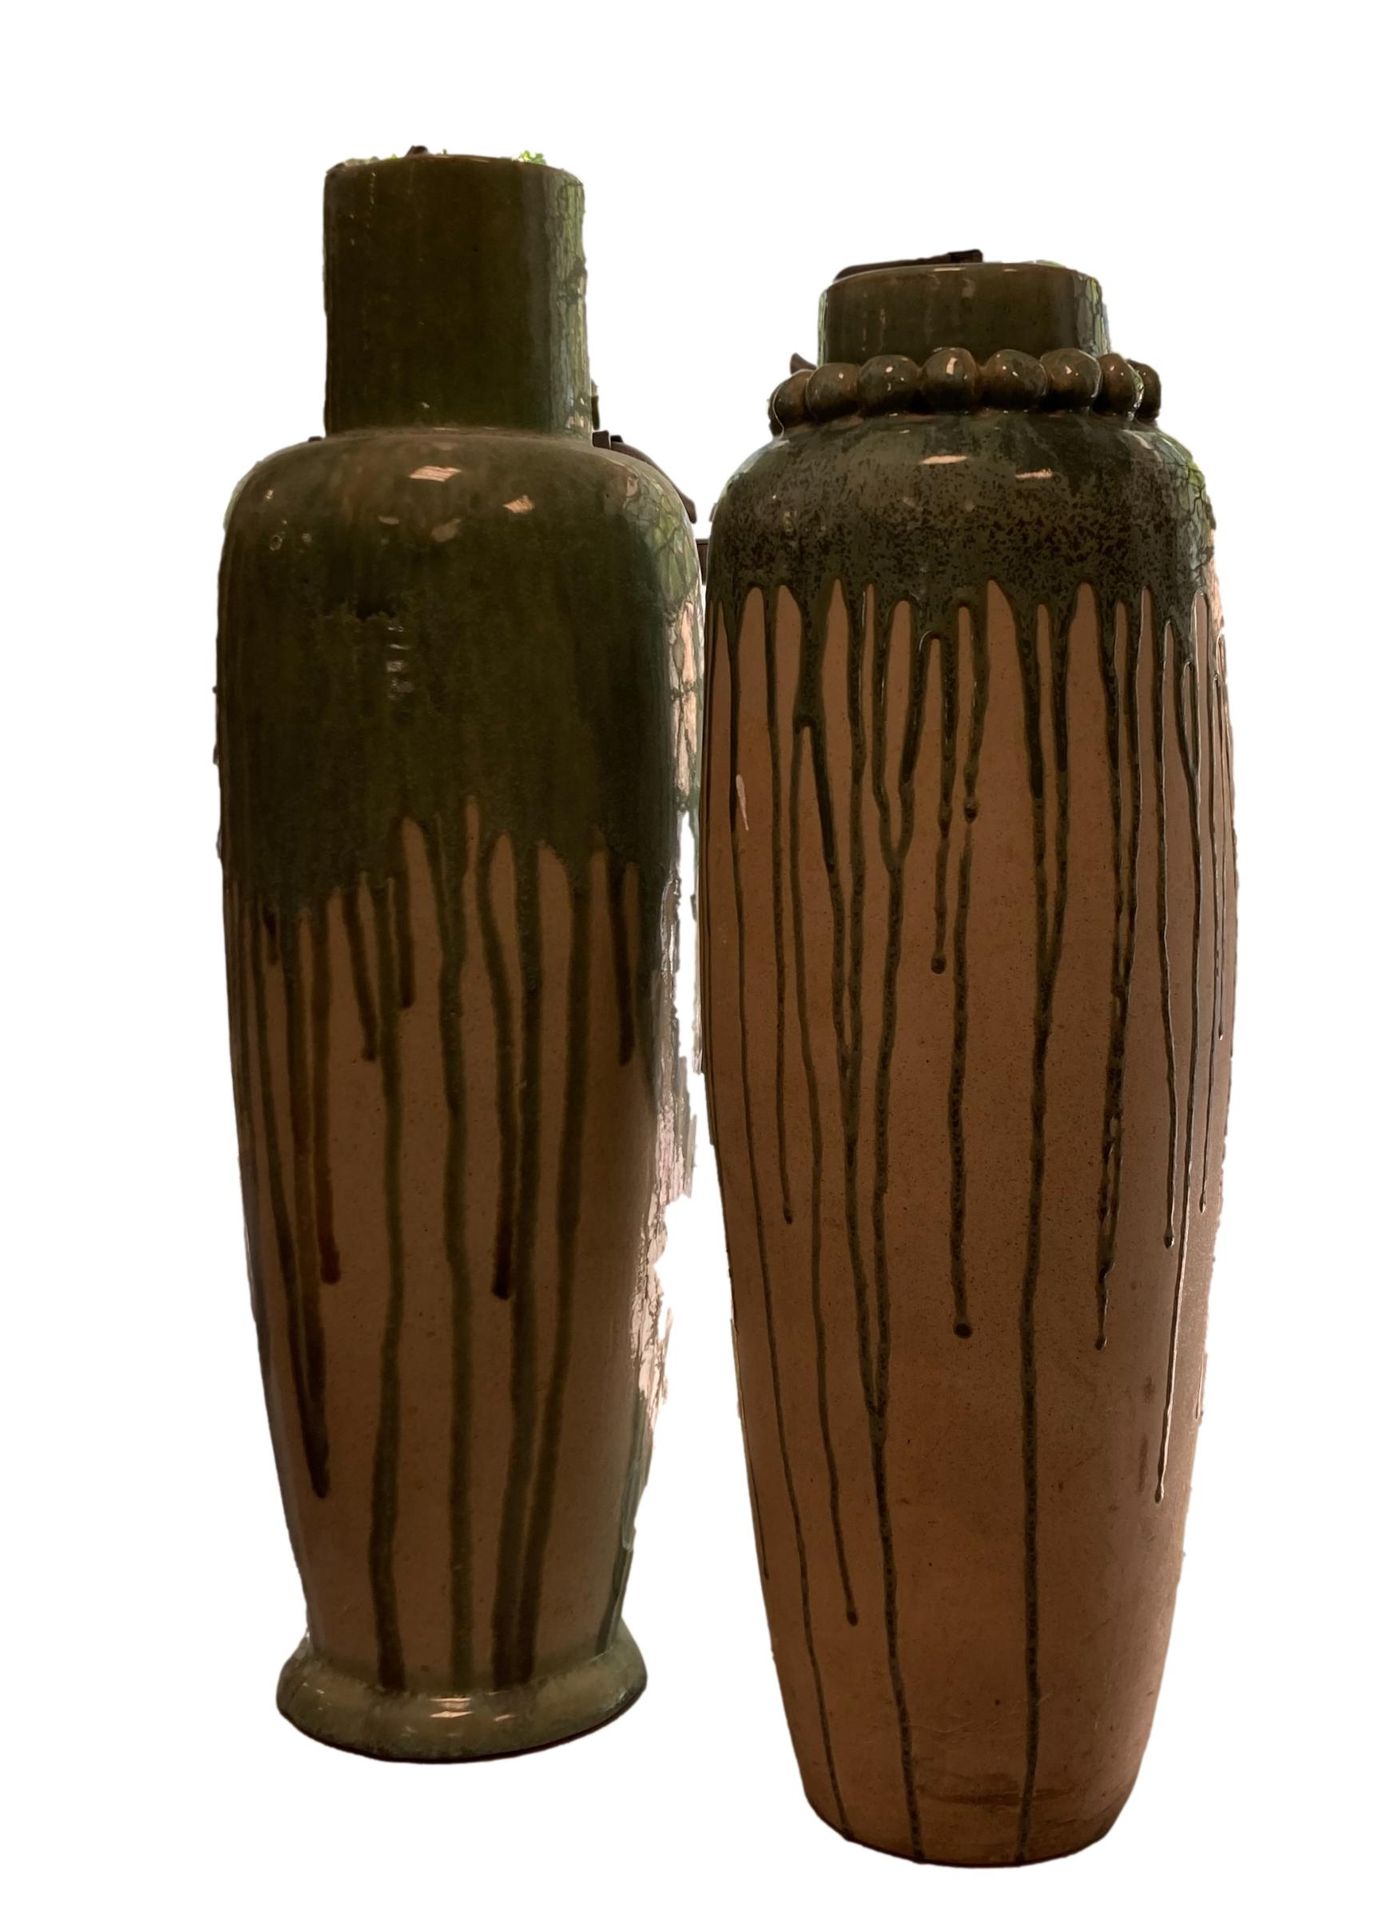 Null ROYAL HICKMAN

两套带绿色水滴和应用球的釉面陶瓷花瓶组合

H.53.5和59.5厘米